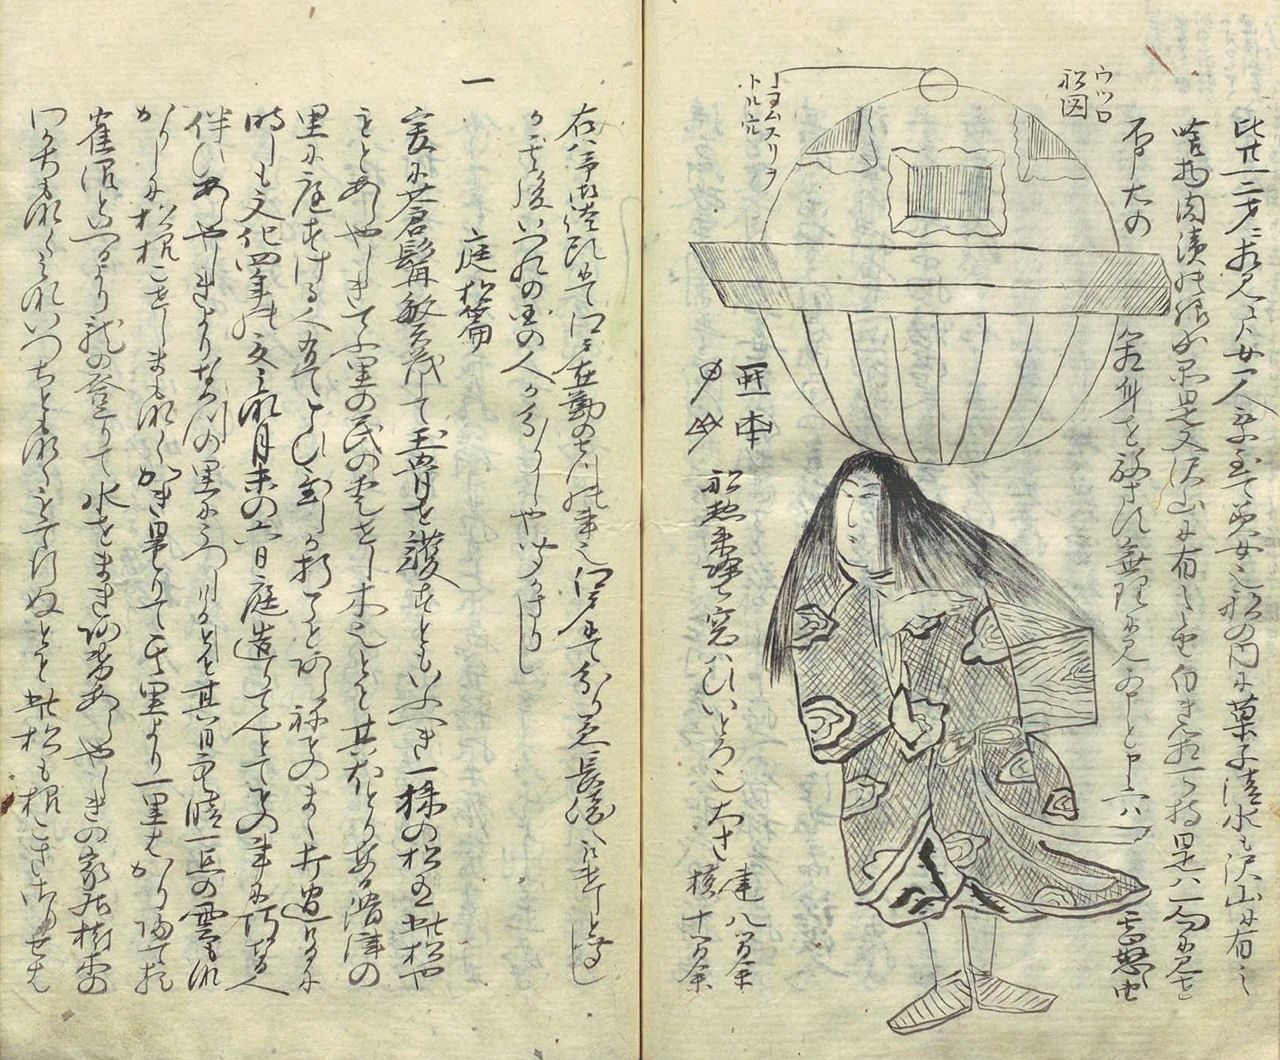 Utsuro-bune 案例：最早的外星人與“空心船”和外星訪客相遇？ 3個